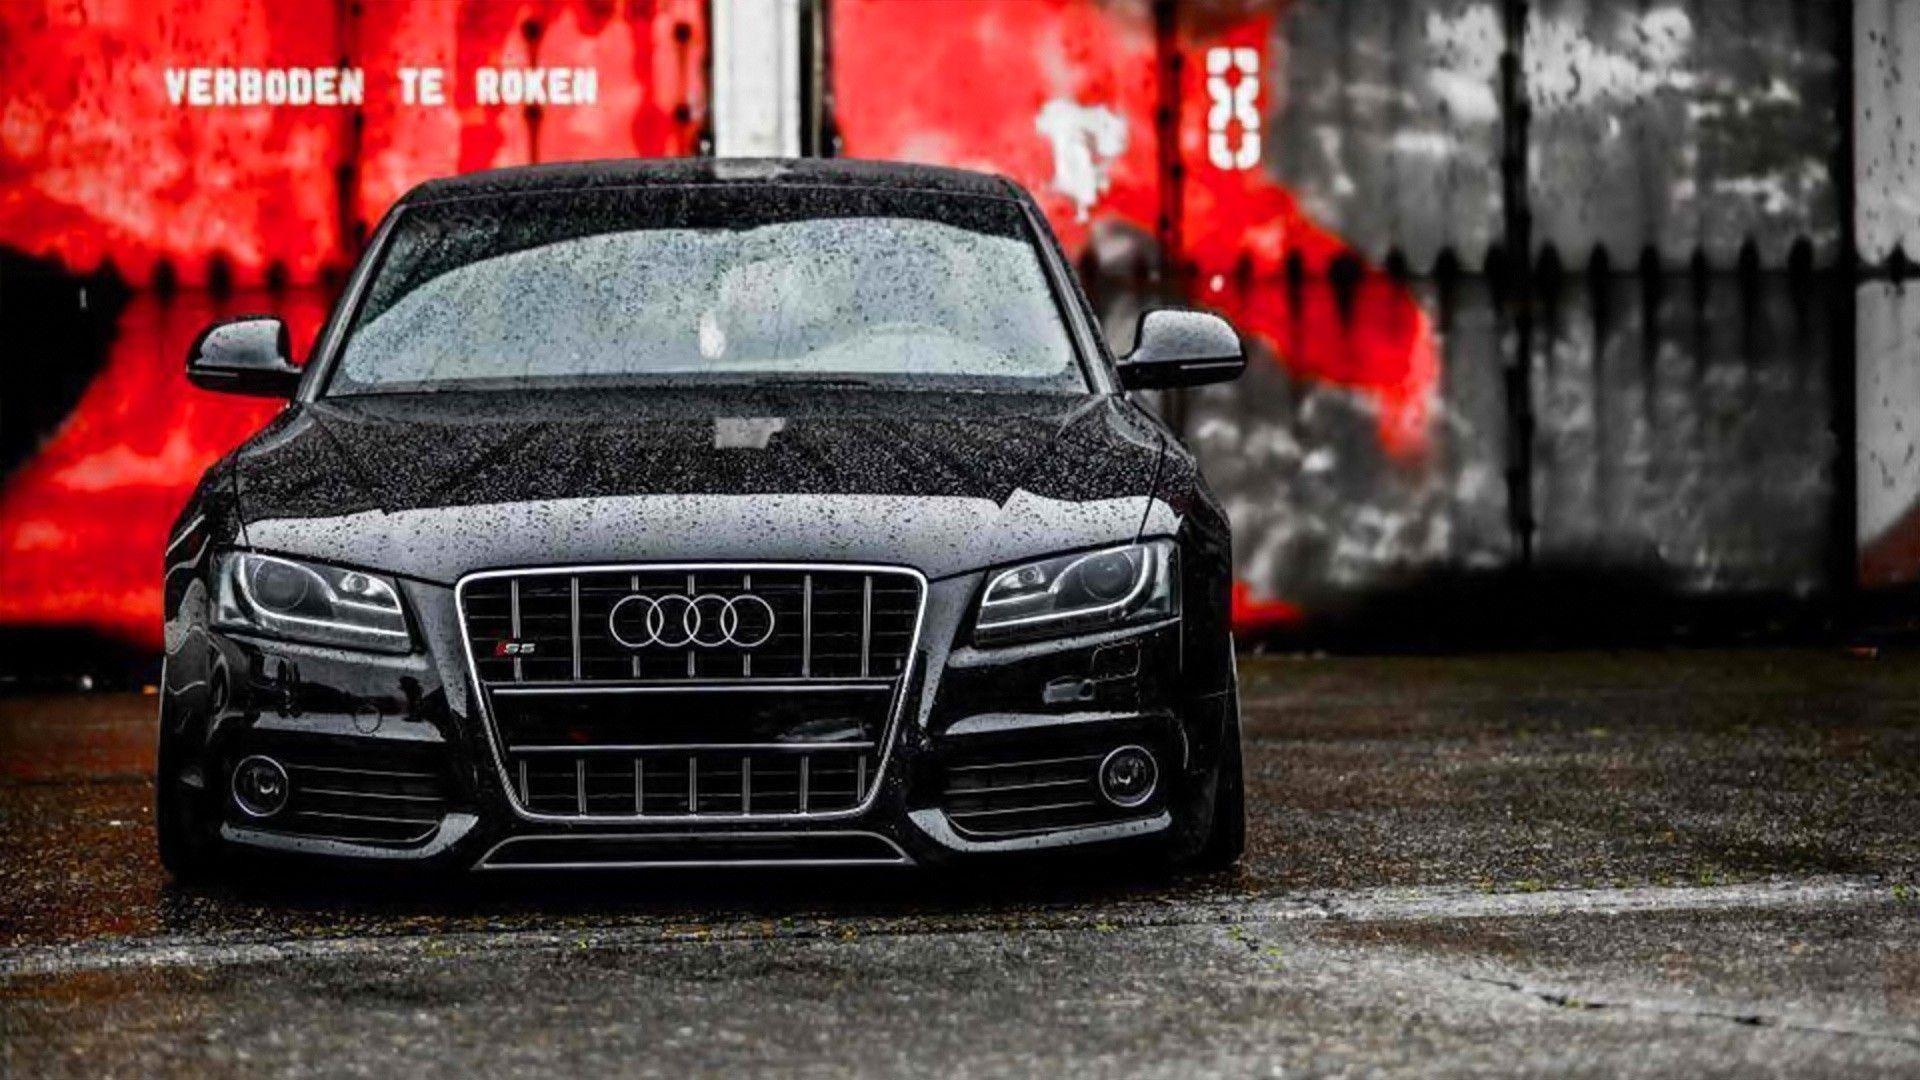 Audi S5 Wallpaper. Audi S5 Background